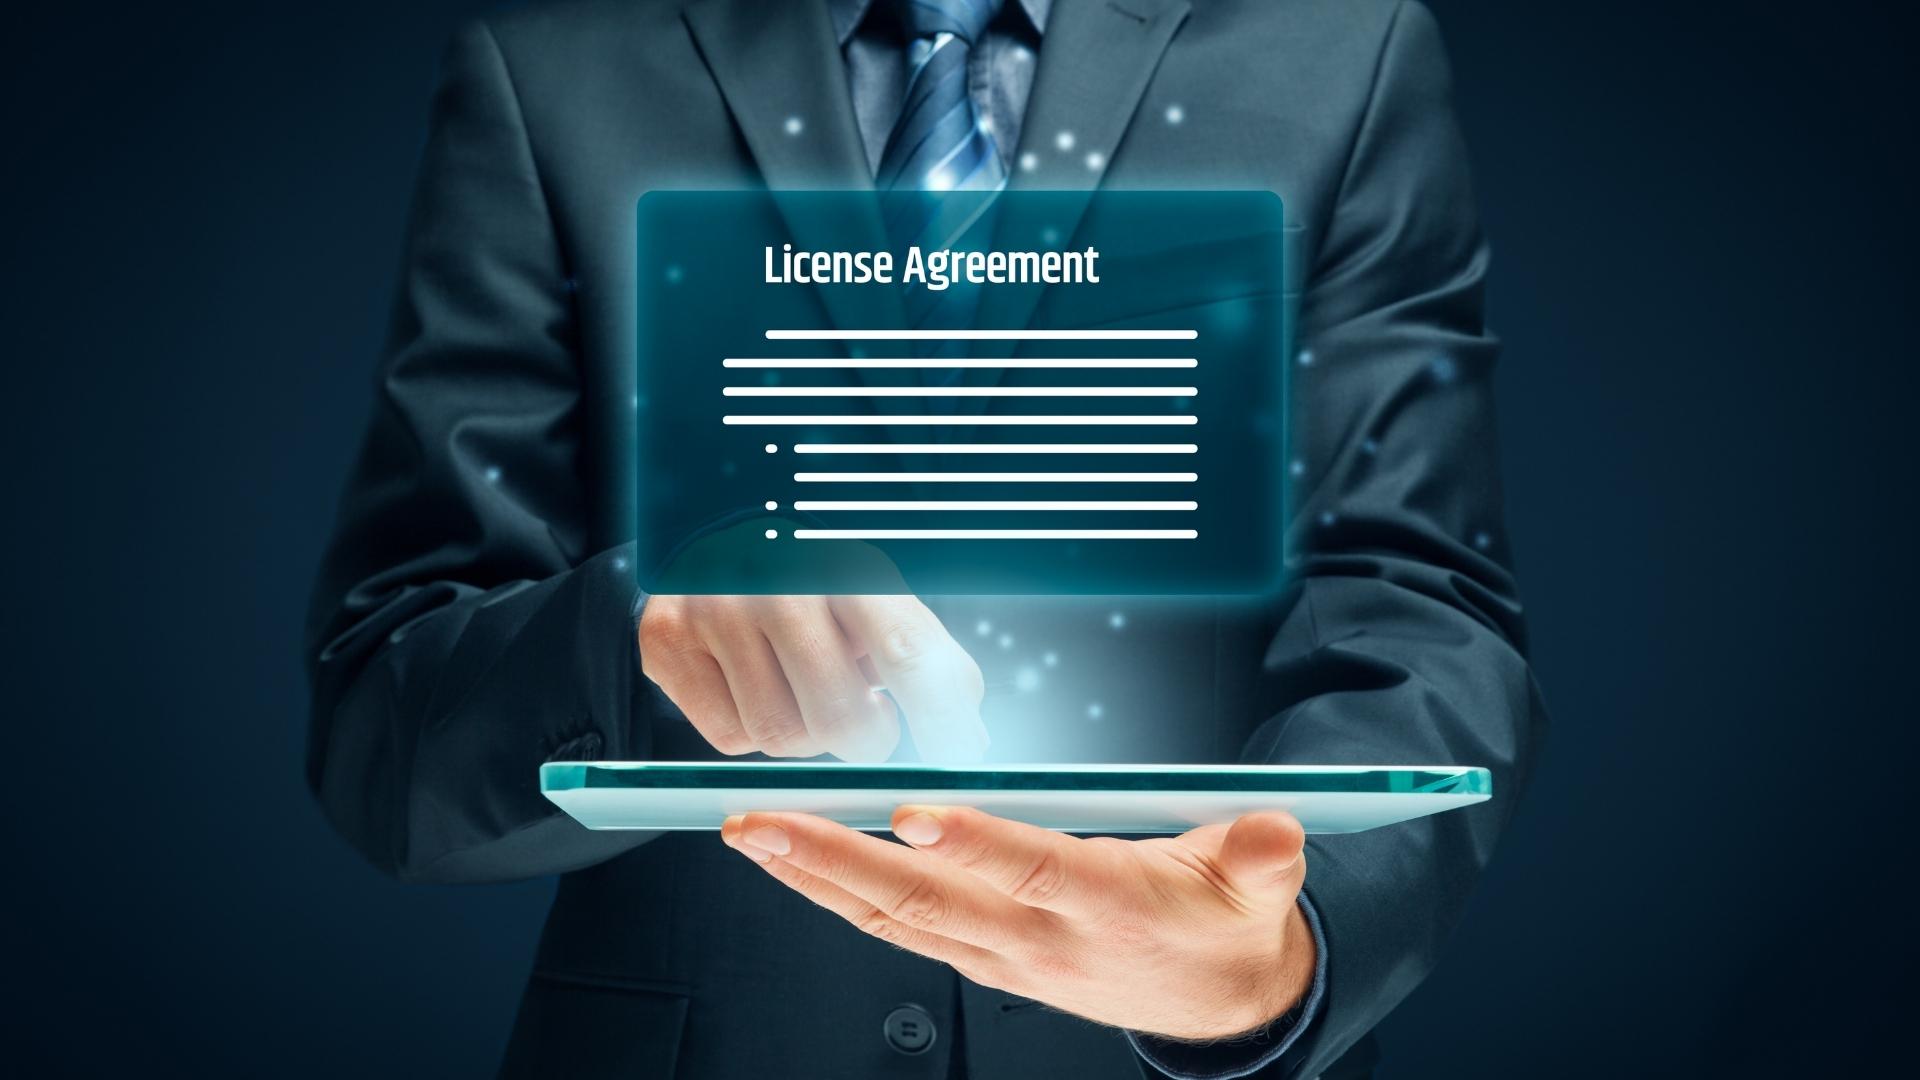 License agreement